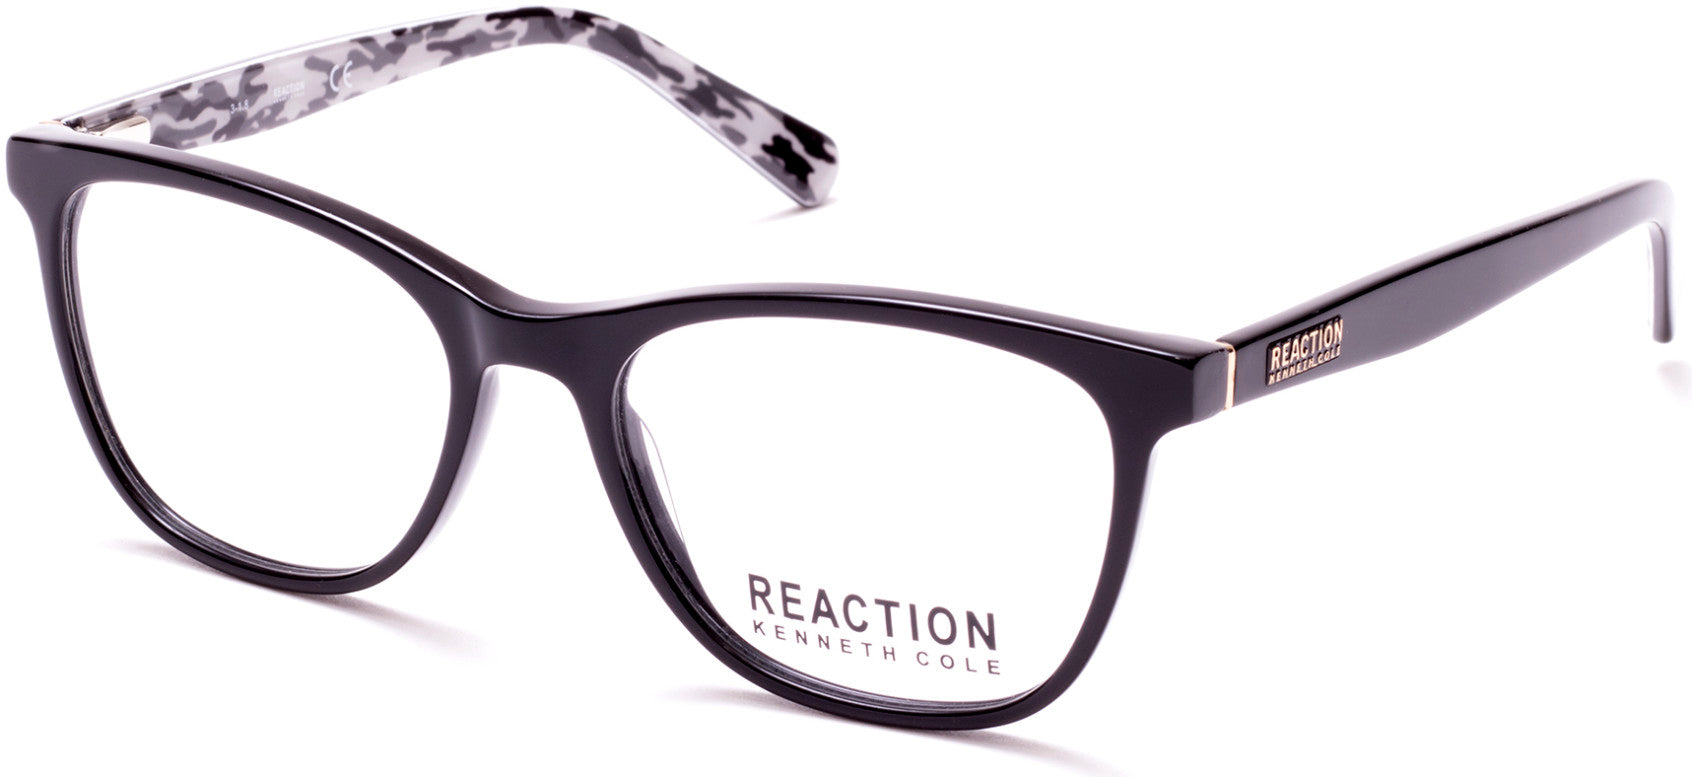 Kenneth Cole New York,Kenneth Cole Reaction KC0806 Geometric Eyeglasses 001-001 - Shiny Black